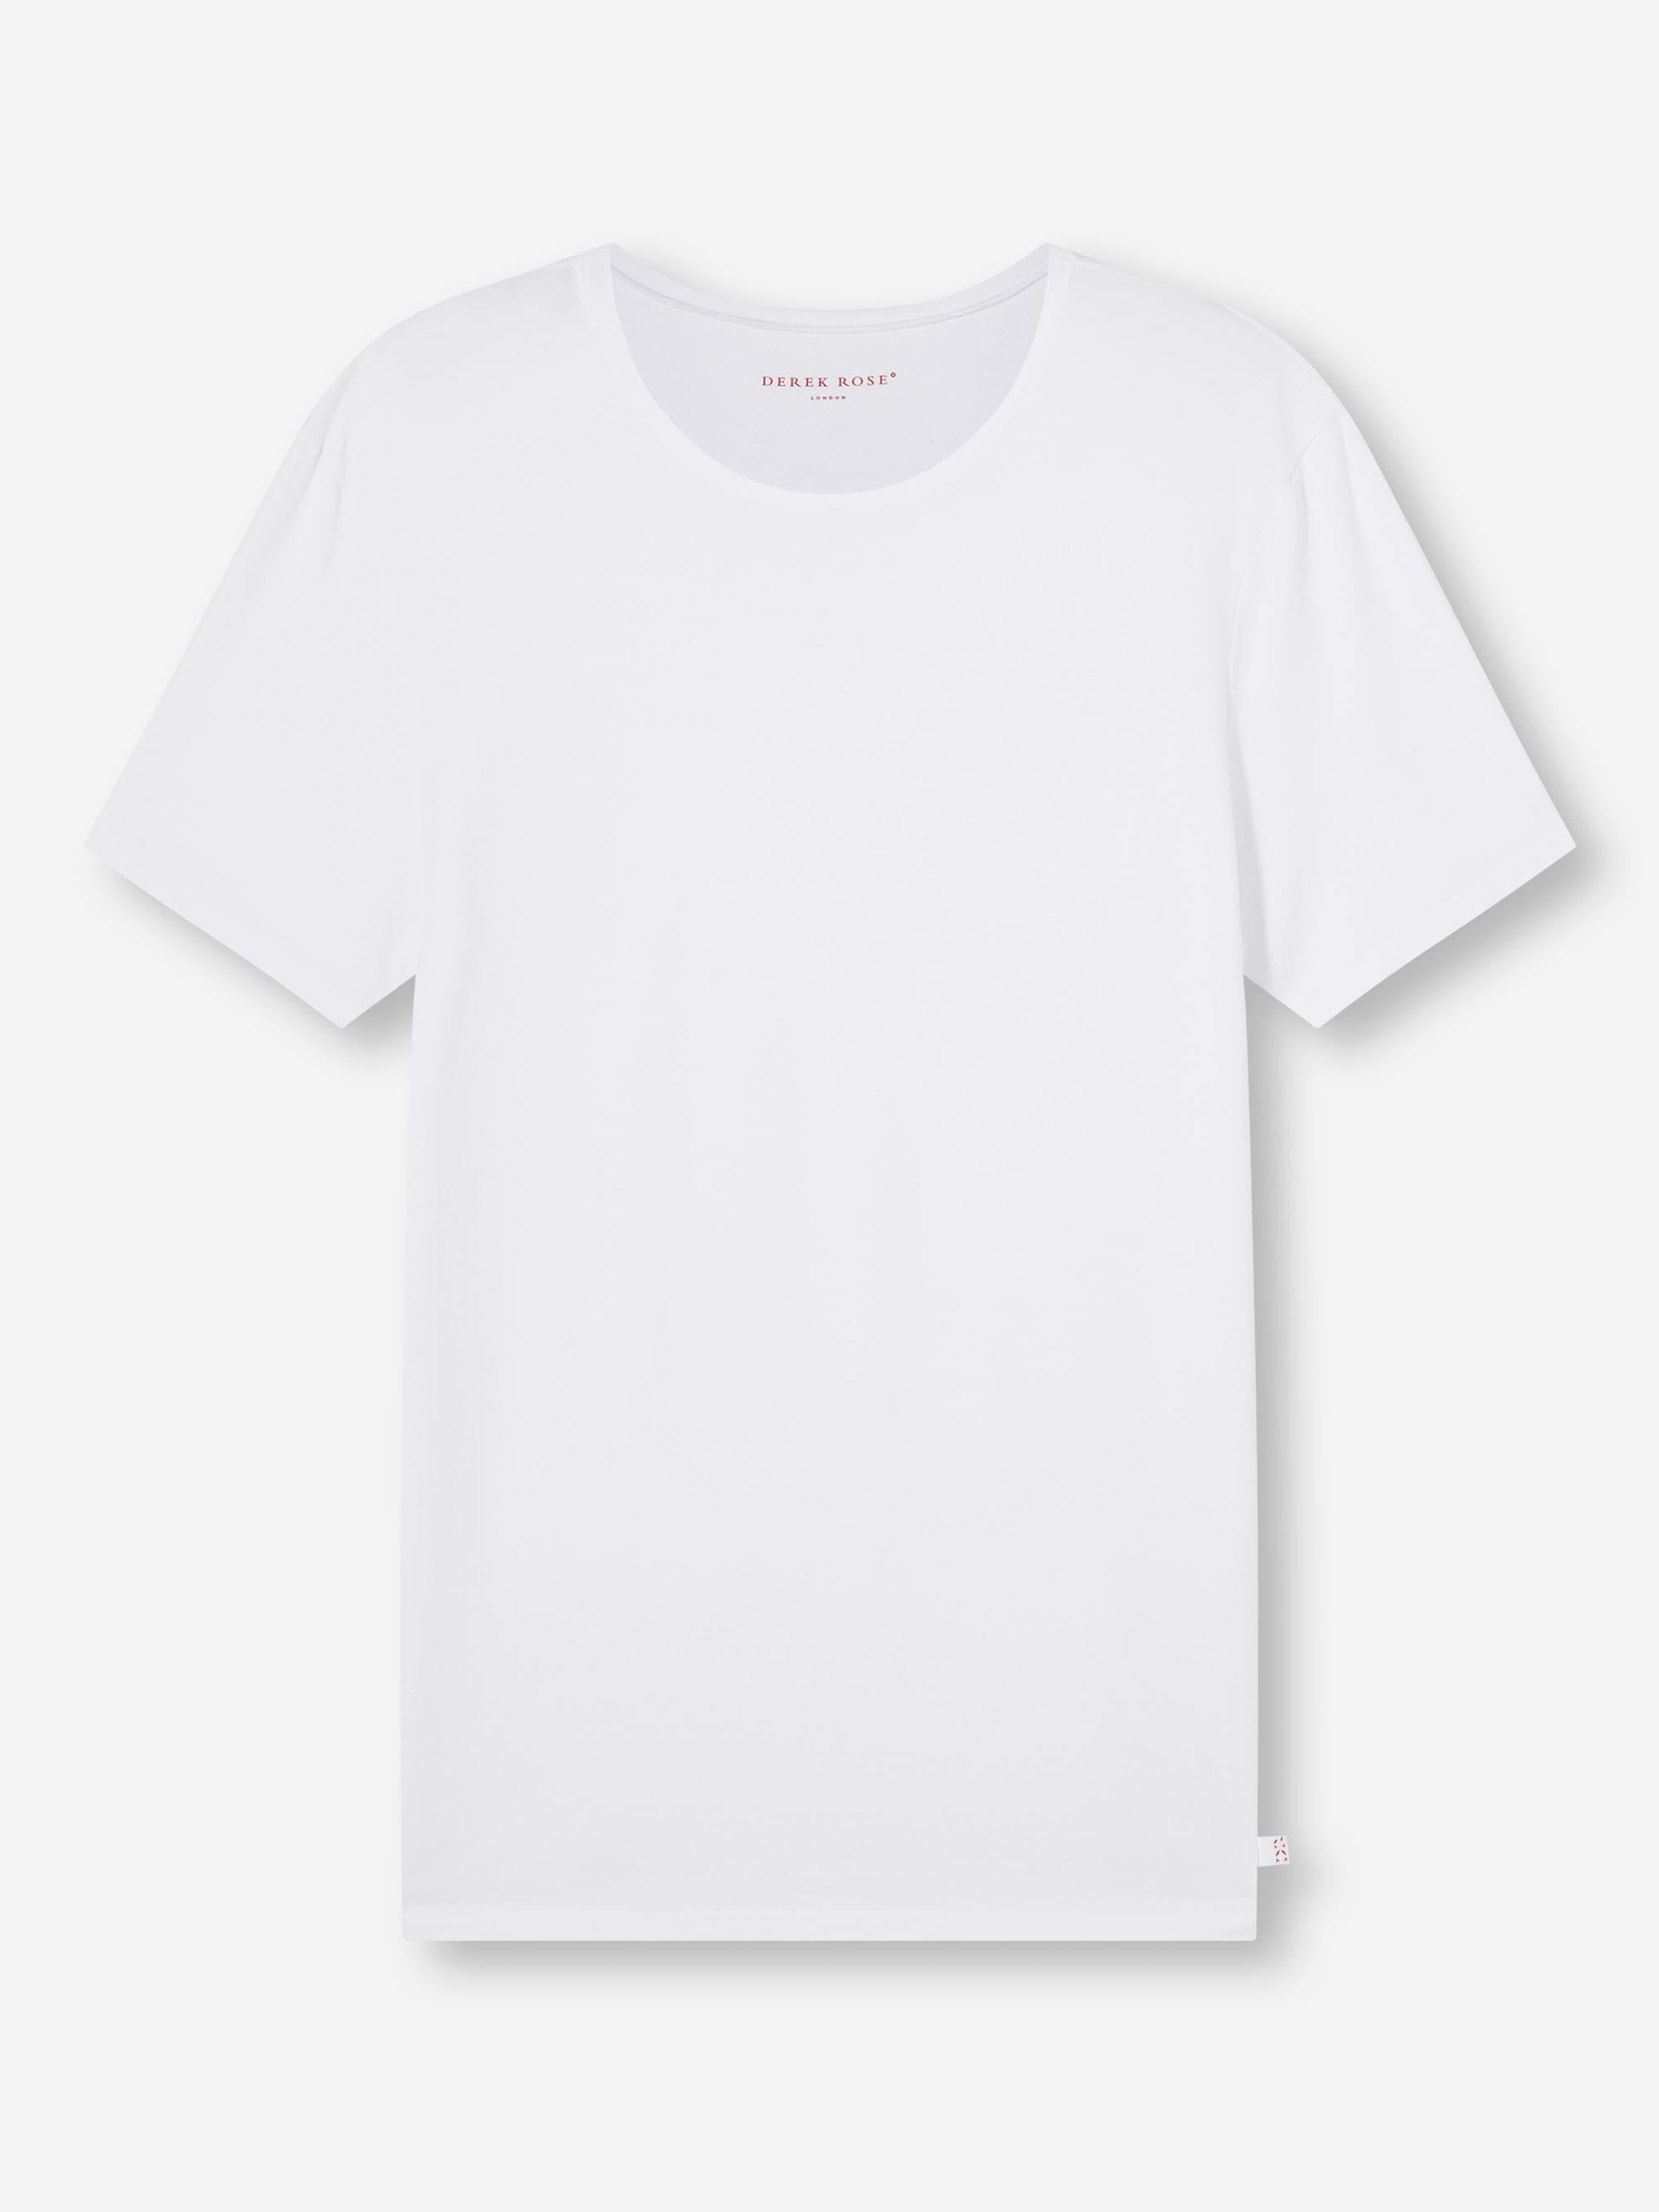 Men's Underwear T-Shirt Alex Micro Modal Stretch White